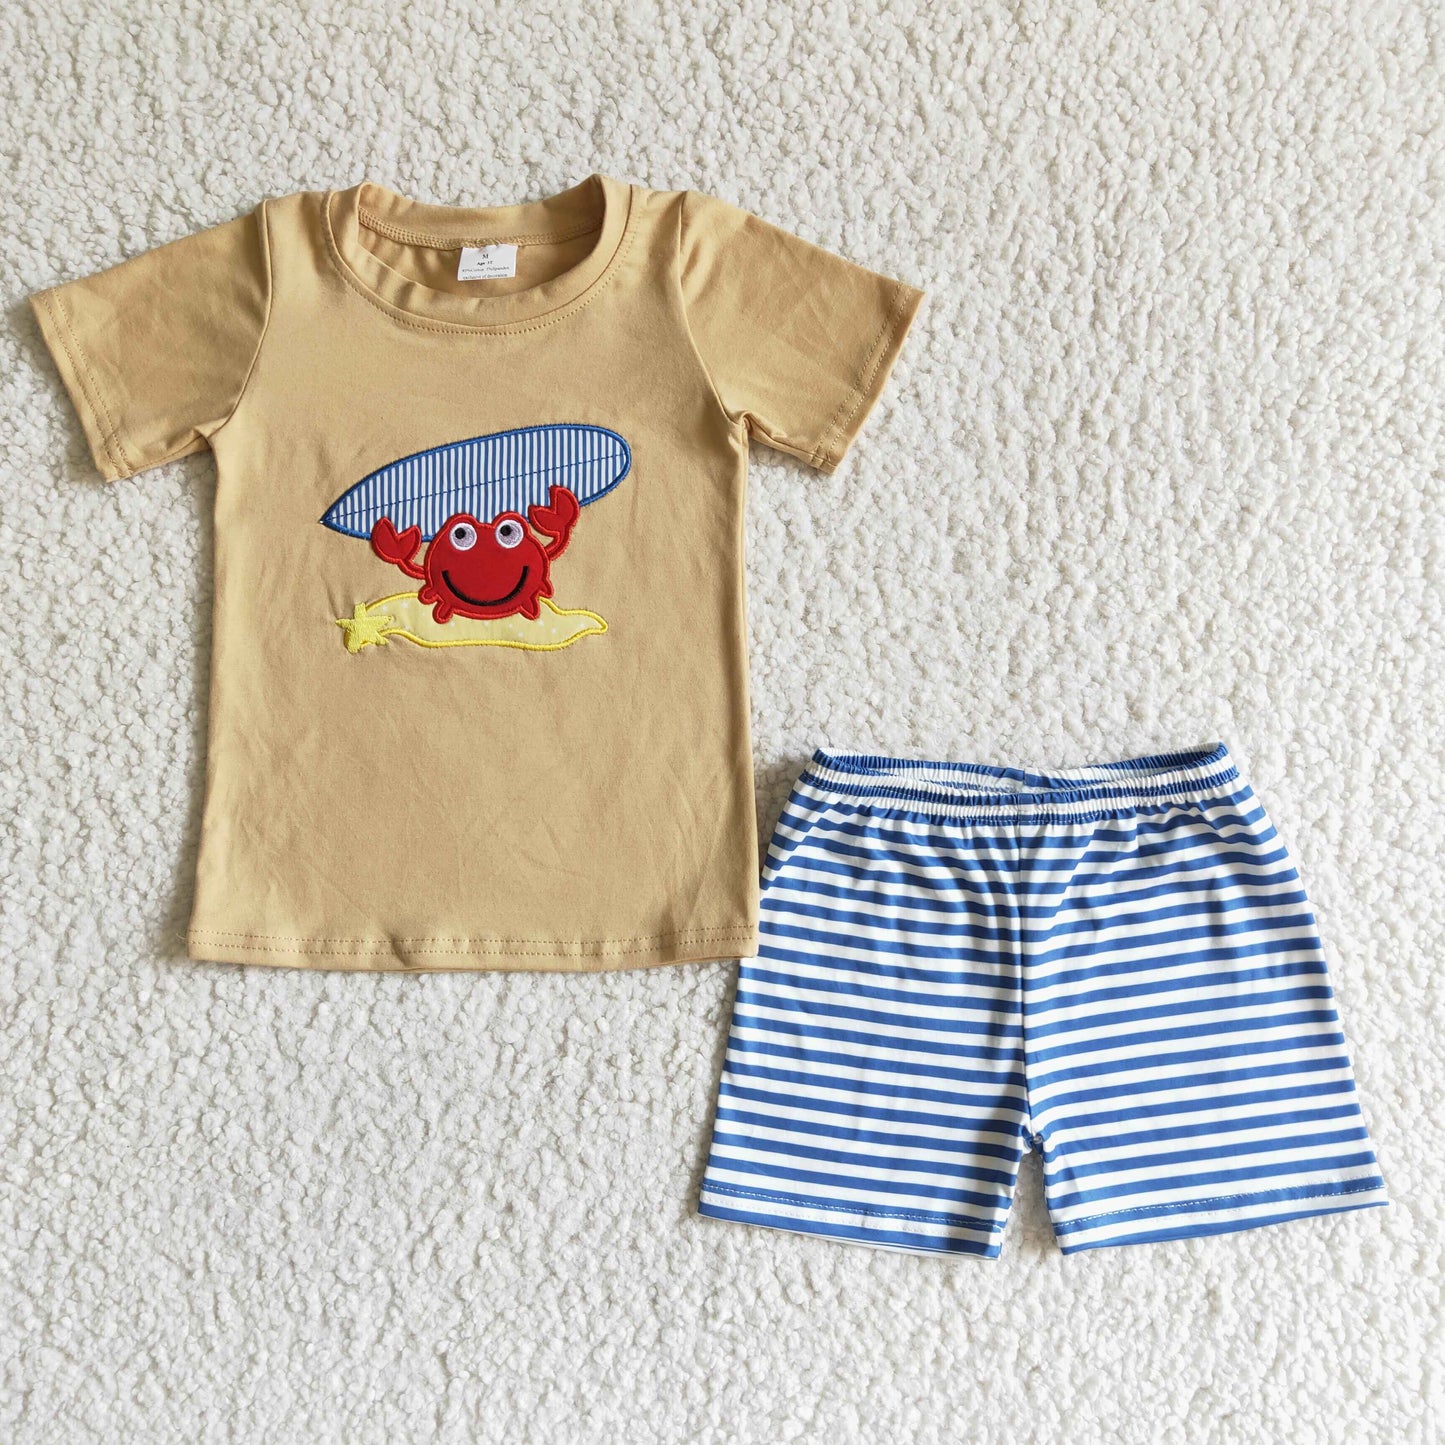 Crab embroidery cotton shirt stripe shorts boy summer clothing